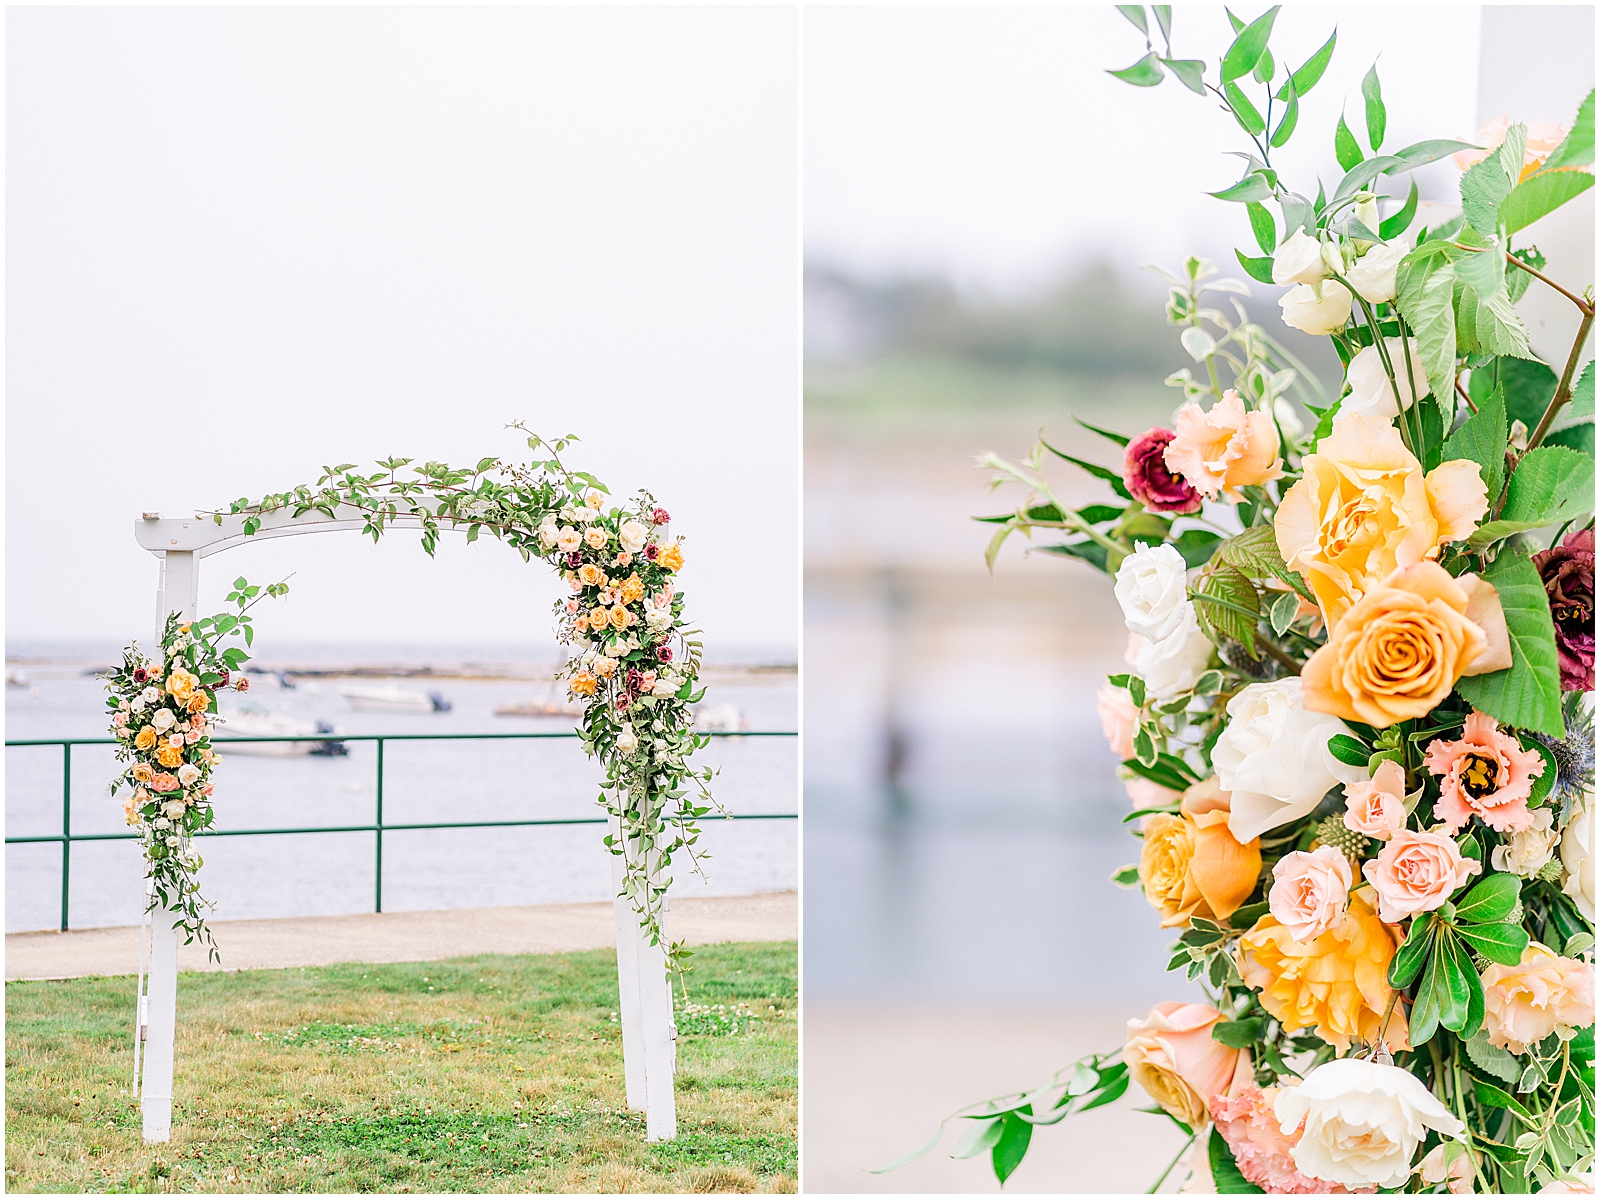 Wedding arbor with floral design by Portland, Maine florist